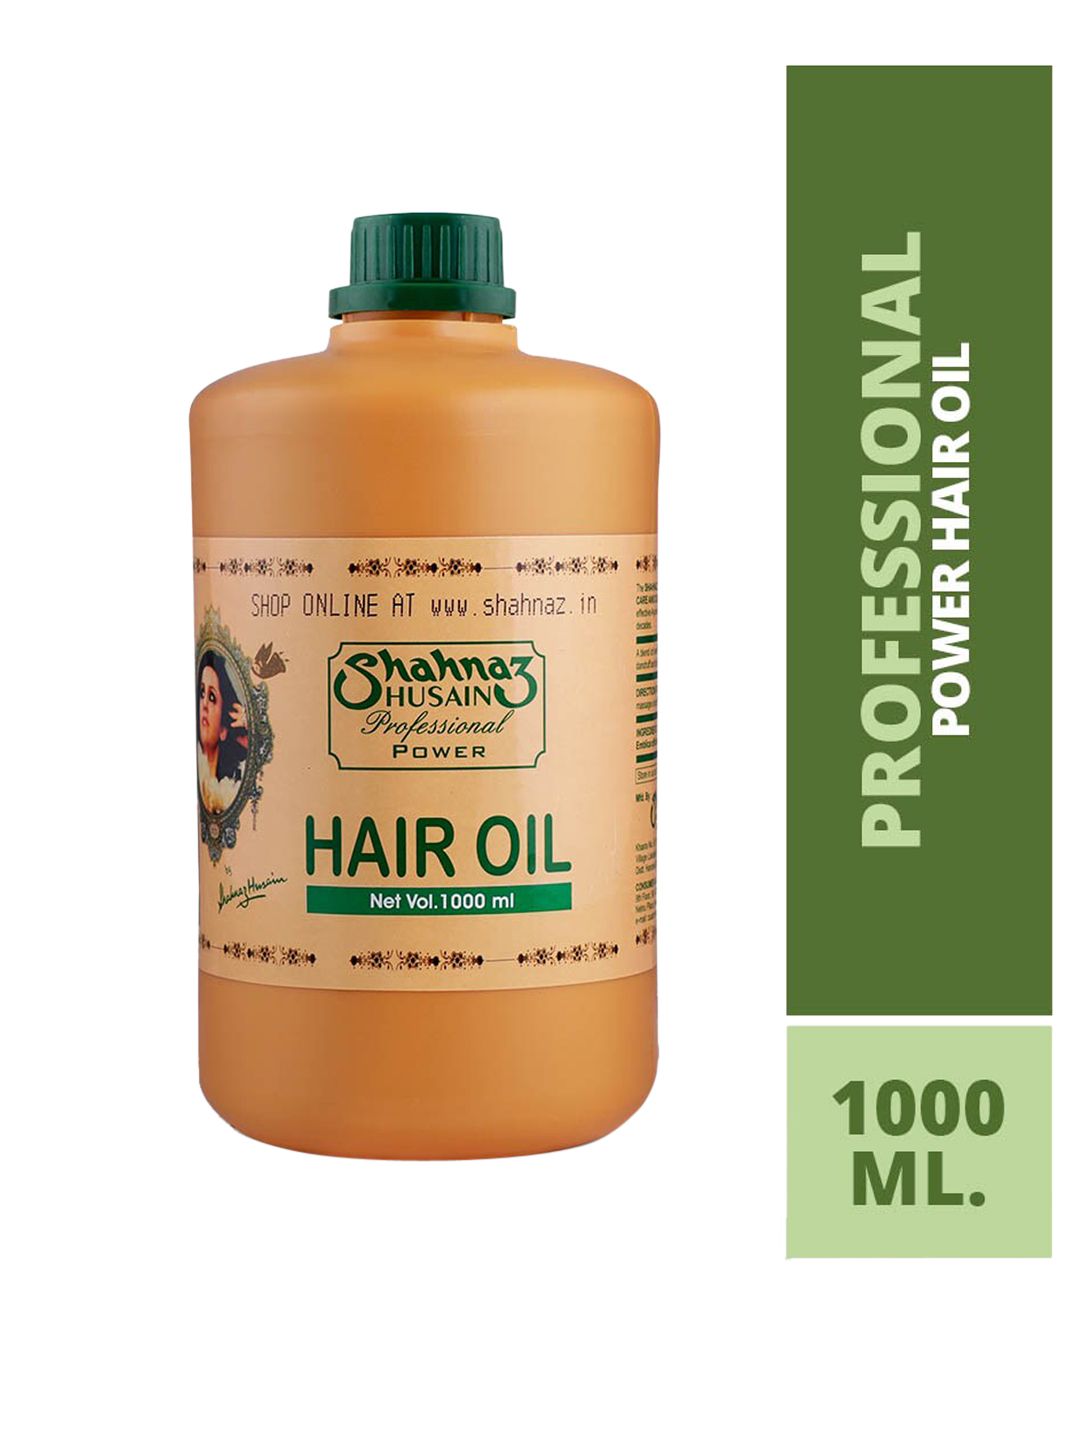 Shahnaz Husain Professional Power Hair Oil 1000ml Price in India